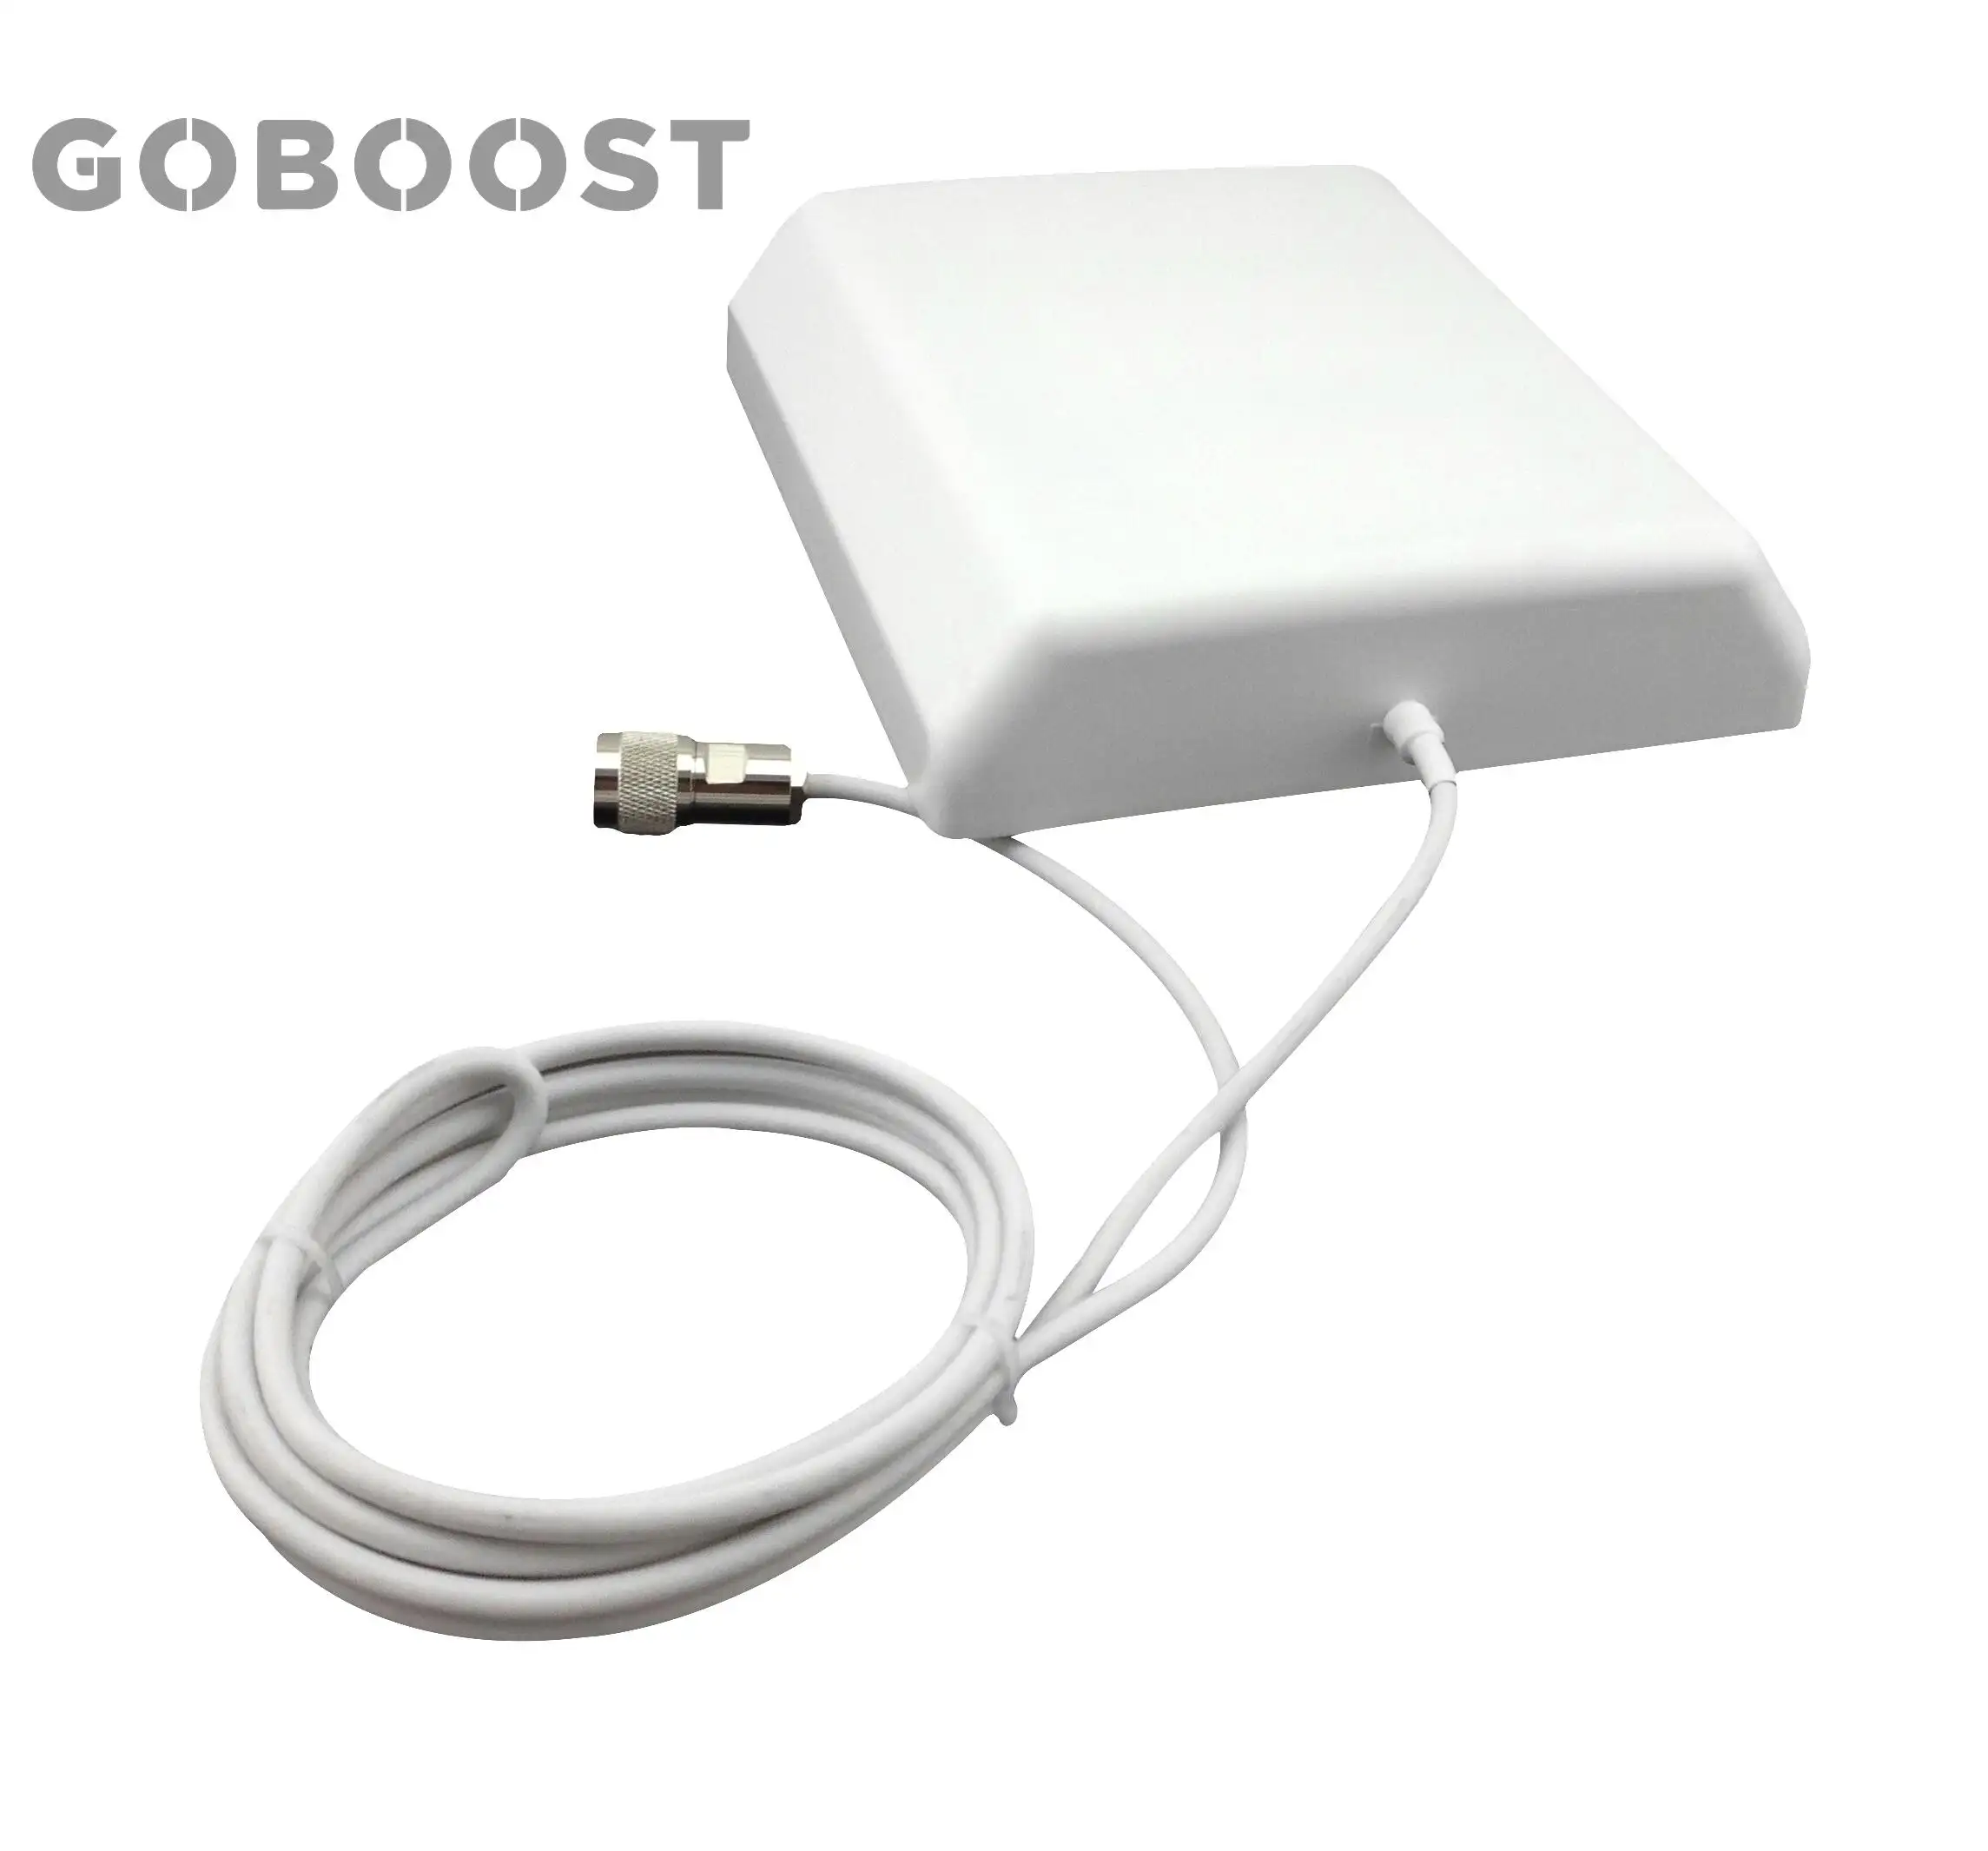 Goboost באיכות גבוהה מקורה בשימוש עוצמה 2G 3G 4G אות פנל <span class=keywords><strong>אנטנה</strong></span> עבור CDMA/GSM/AWS/DCS/PCS/WCDMA MHz מערכת